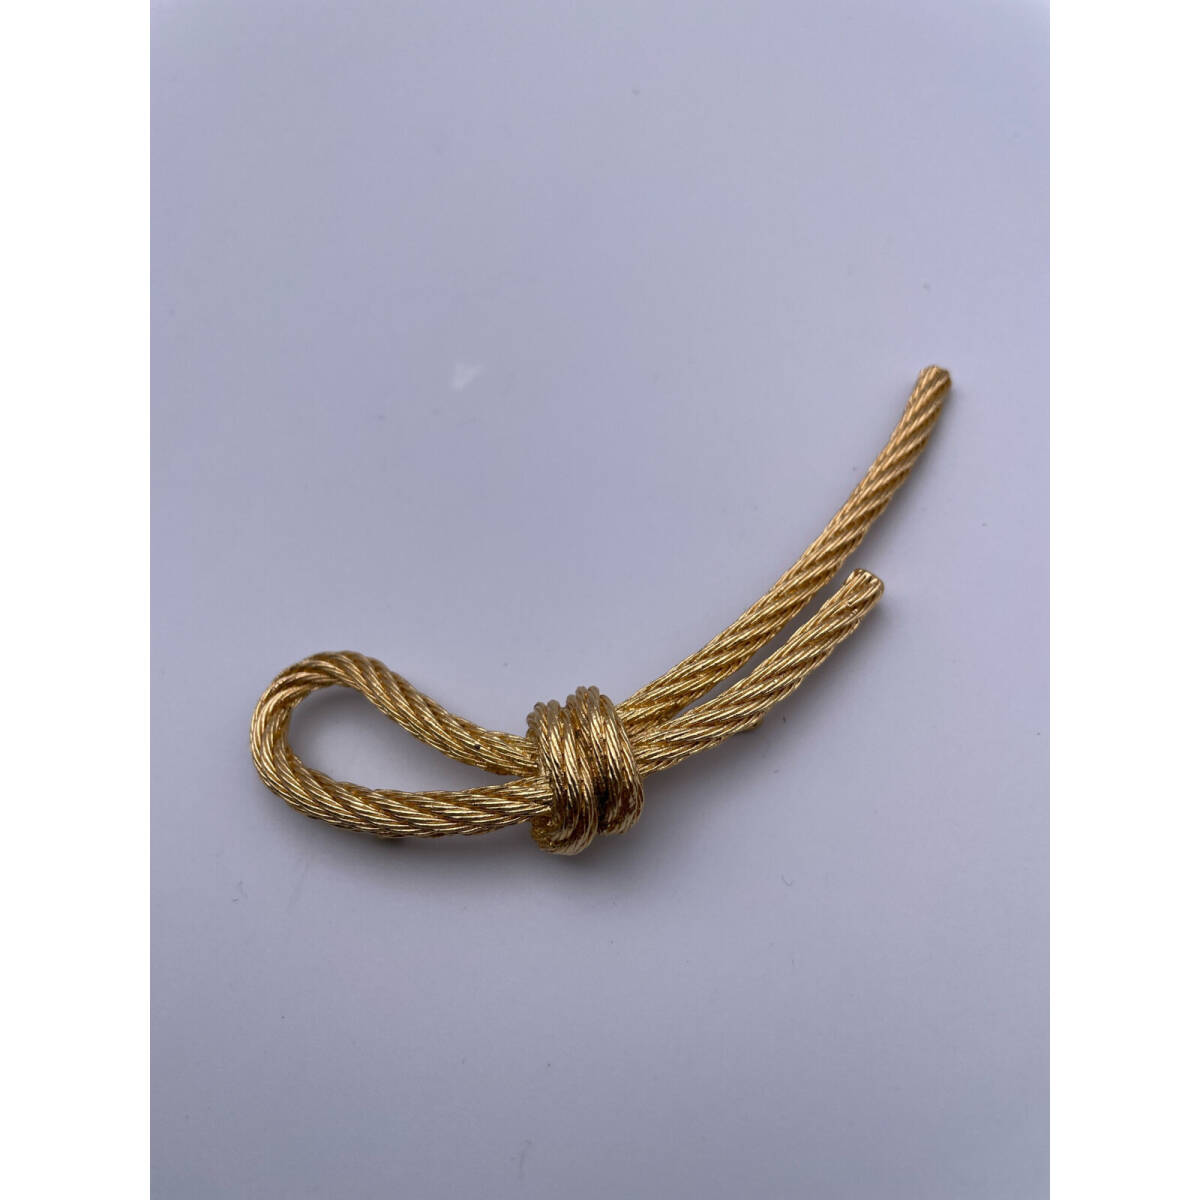 1 jpy Christian Dior Christian Dior Gold GP rope design brooch brooch 